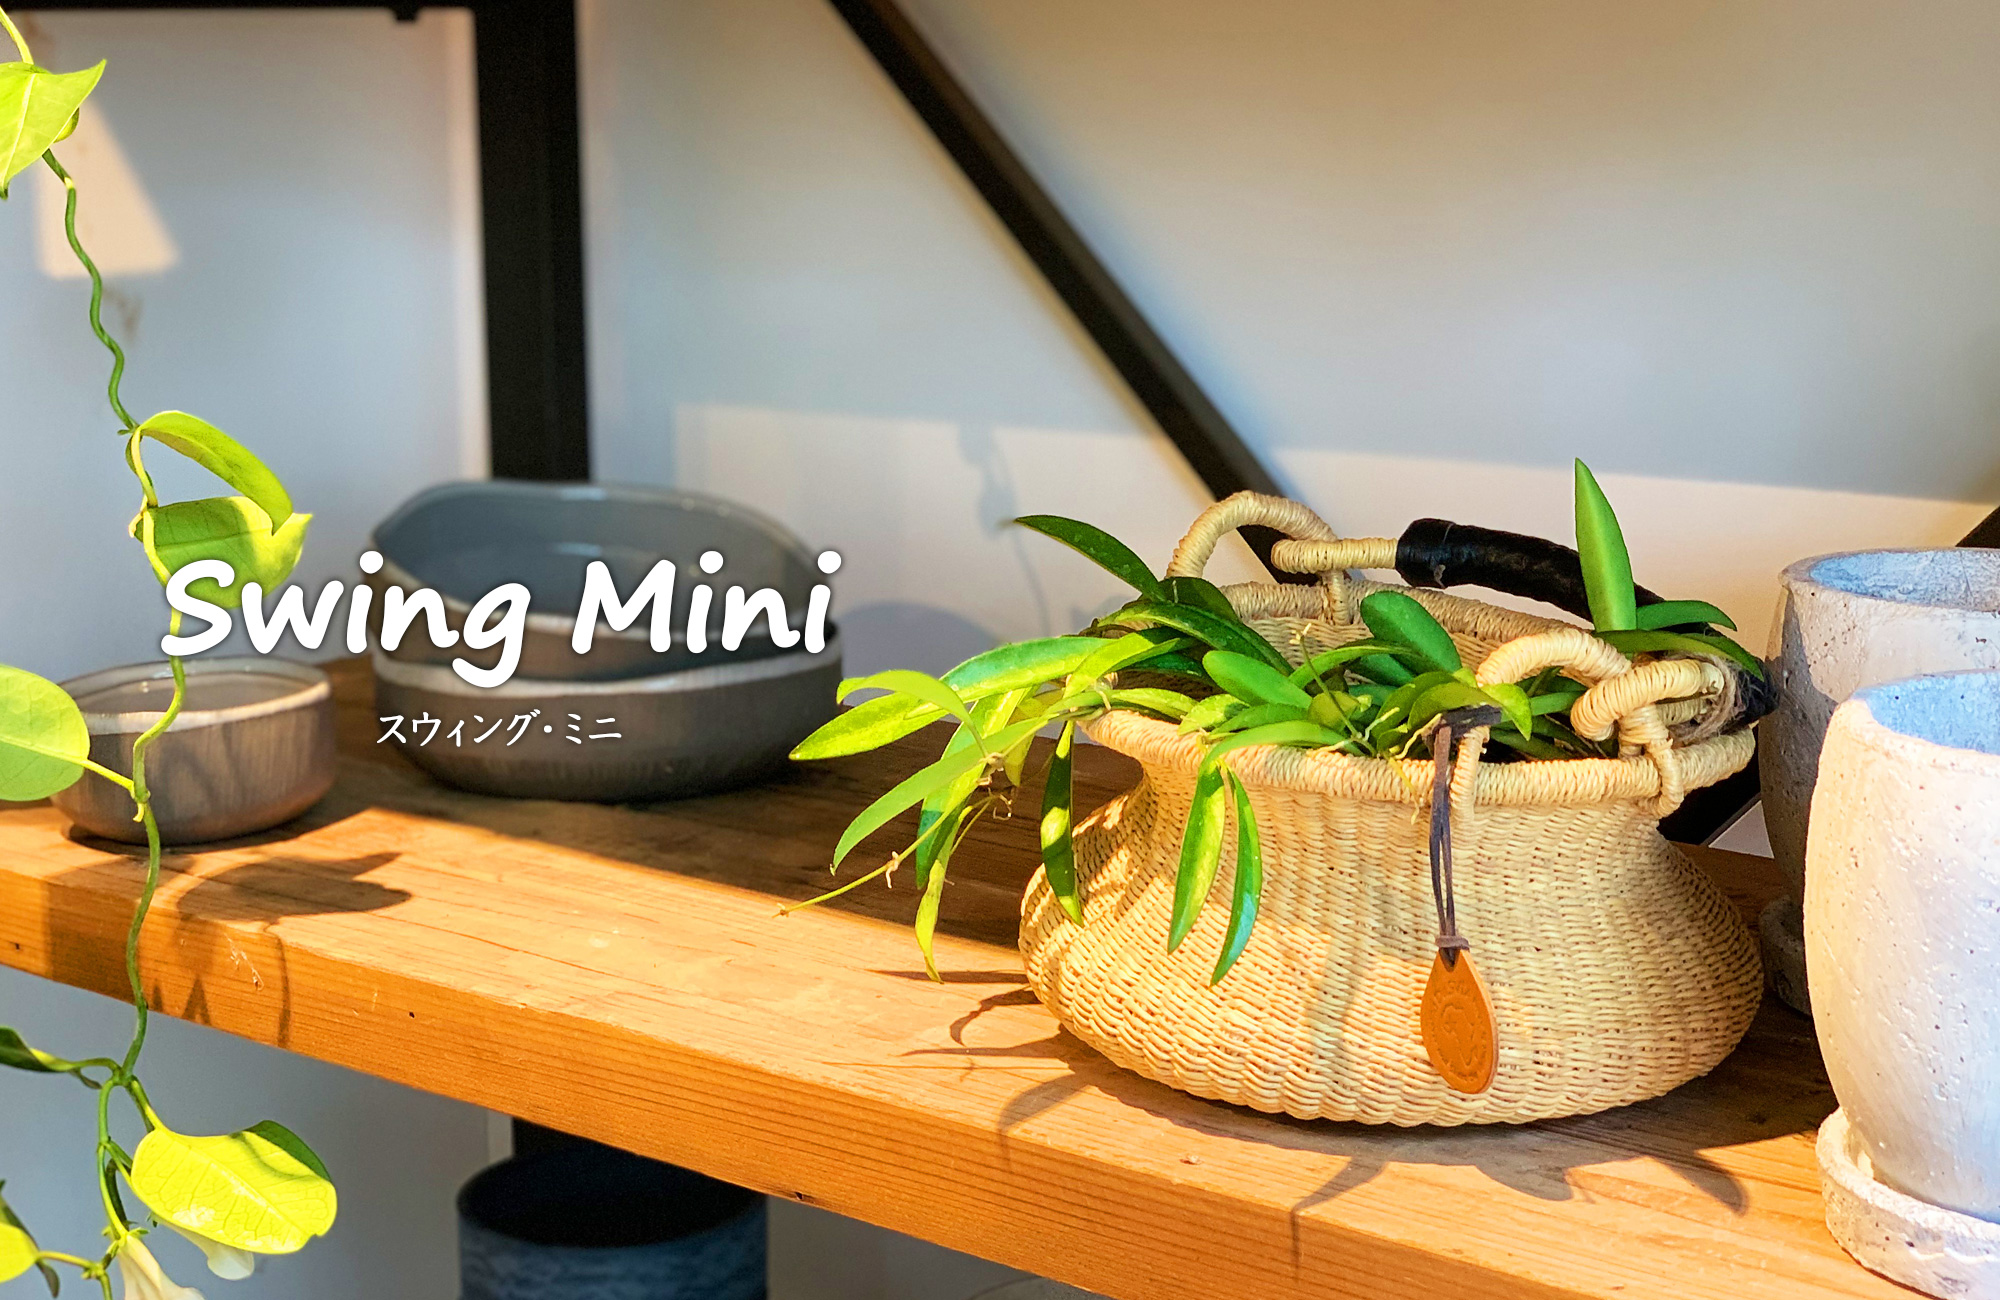 Swing Mini:スウィング・ミニ